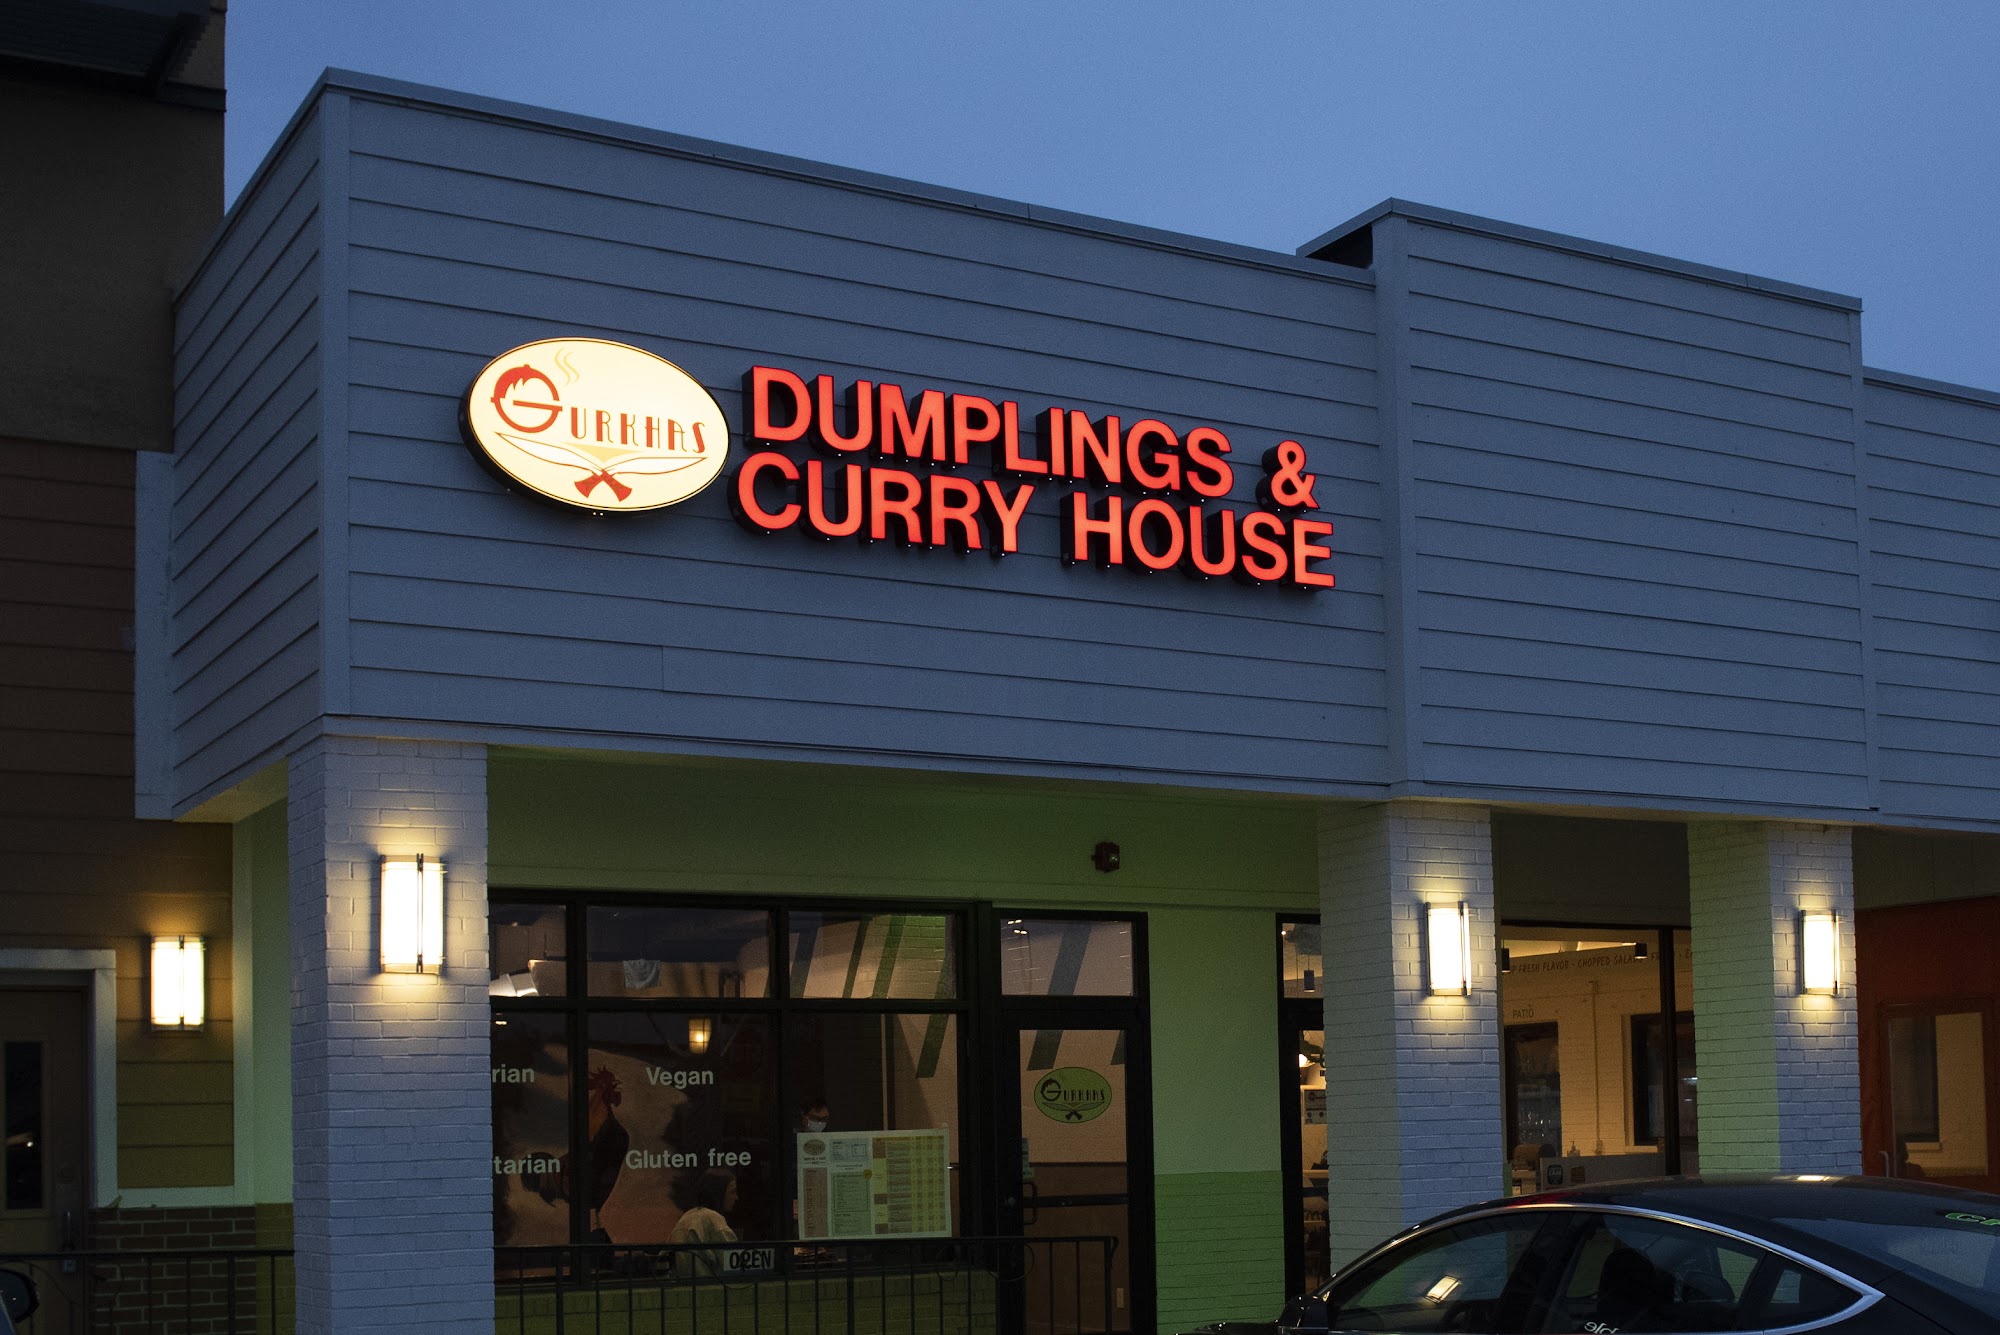 Gurkhas Dumplings & Curry House